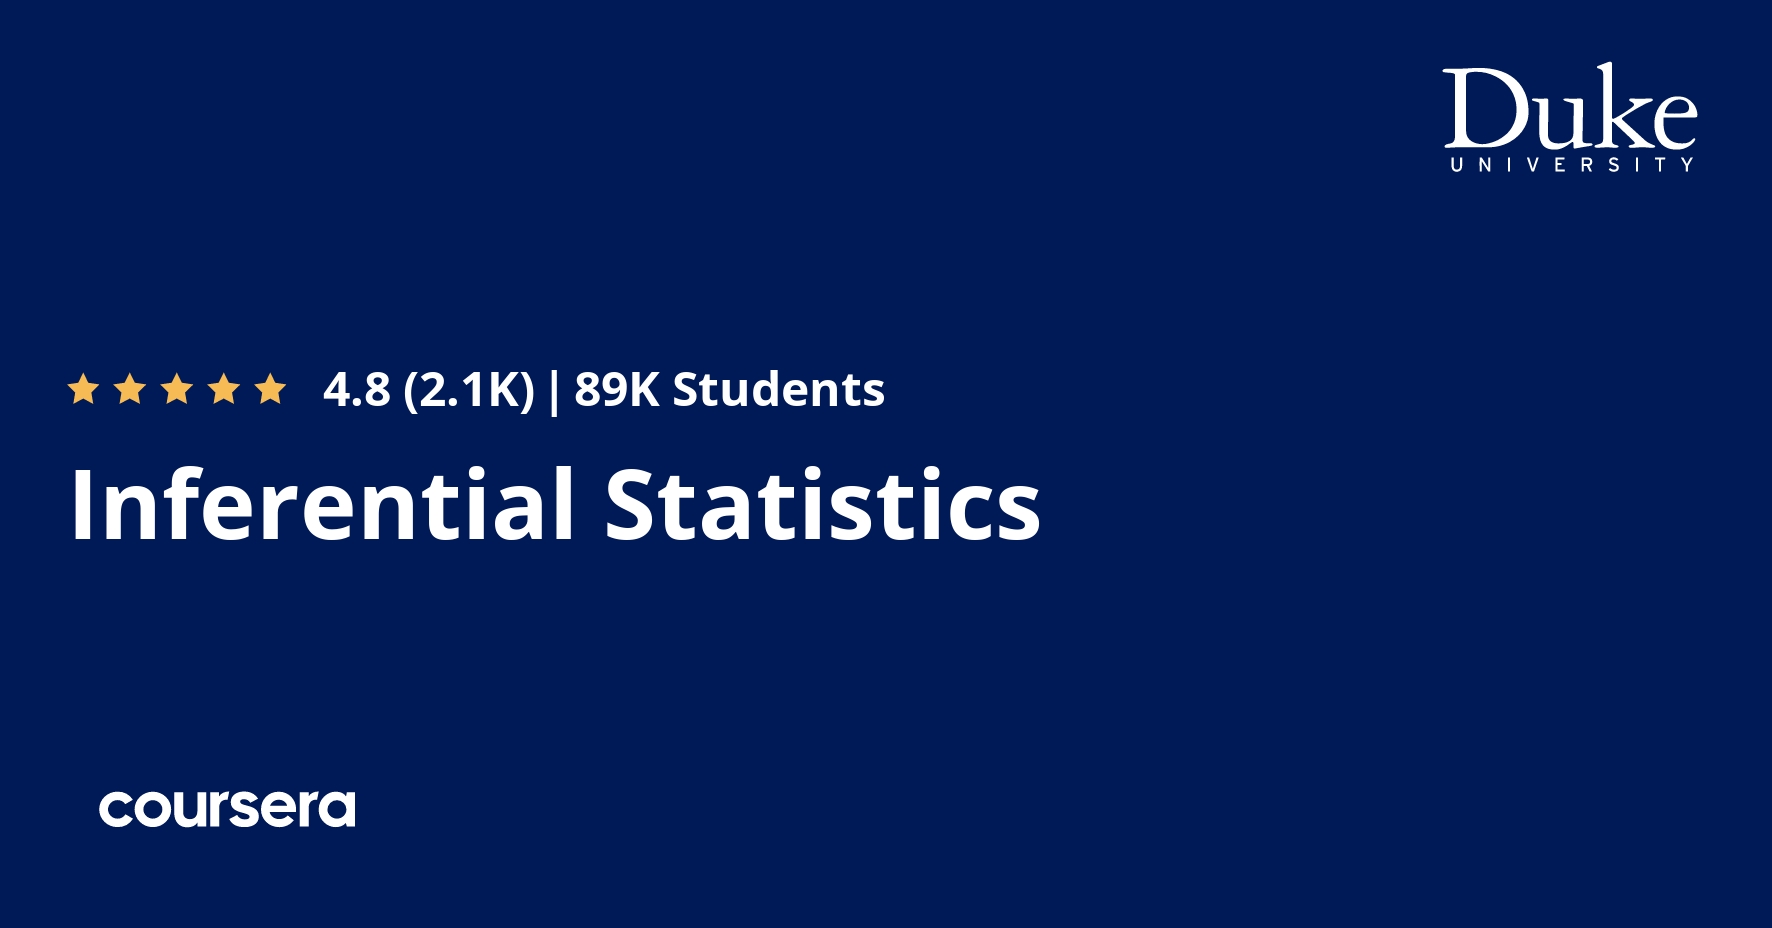 duke university statistics phd